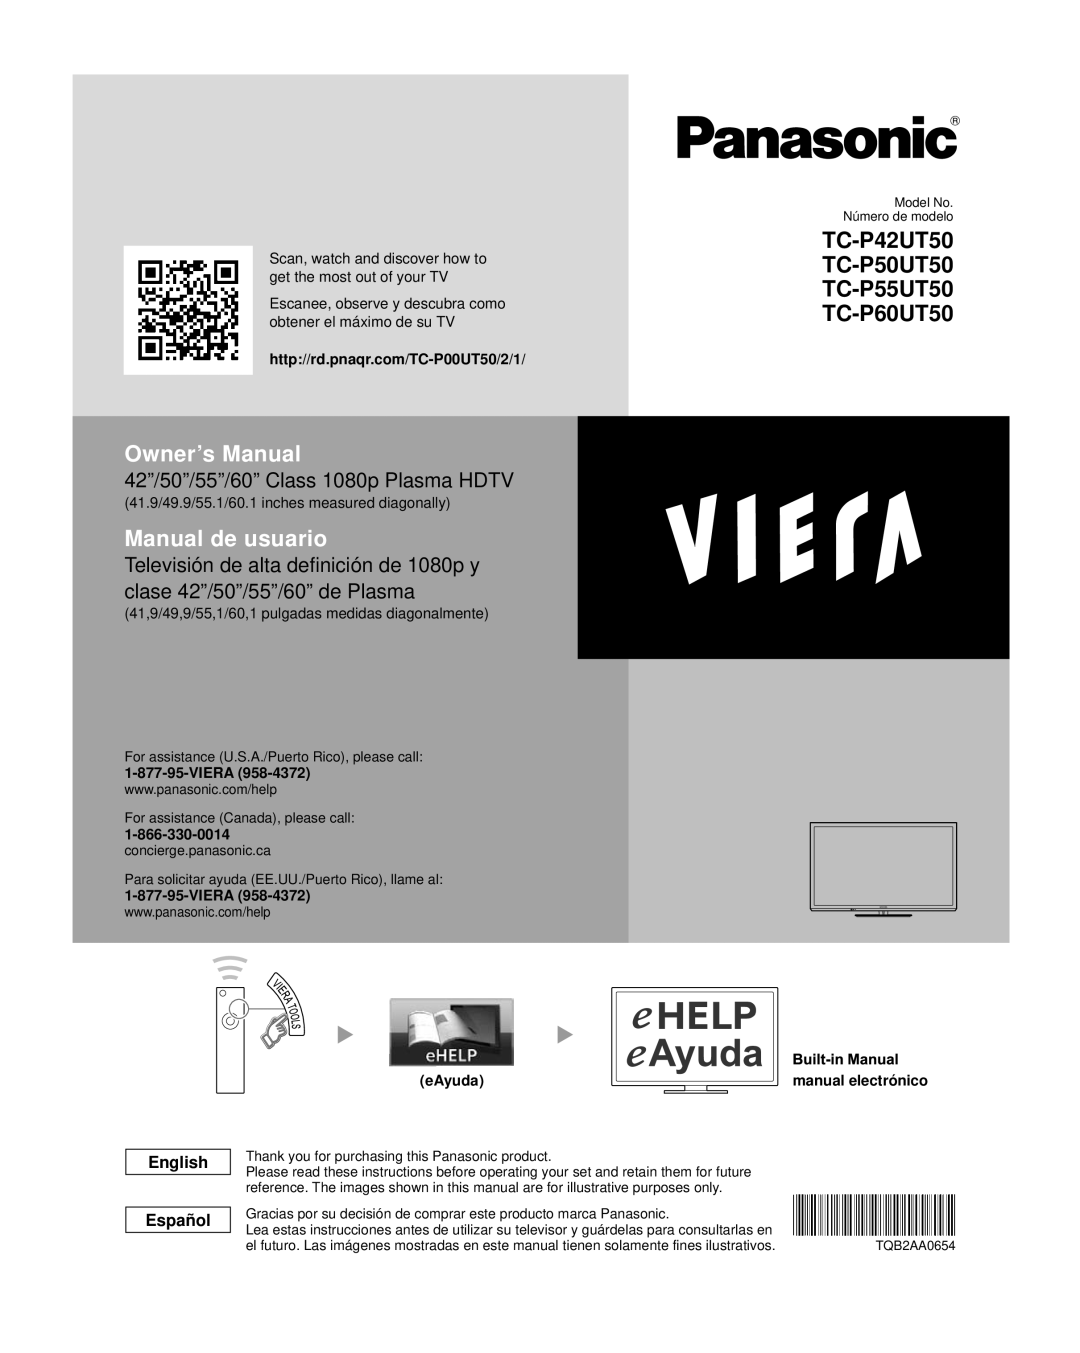 Panasonic TC-P50UT50 owner manual 42”/50”/55”/60” Class 1080p Plasma HDTV, Owner’s Manual, Manual de usuario, Viera 